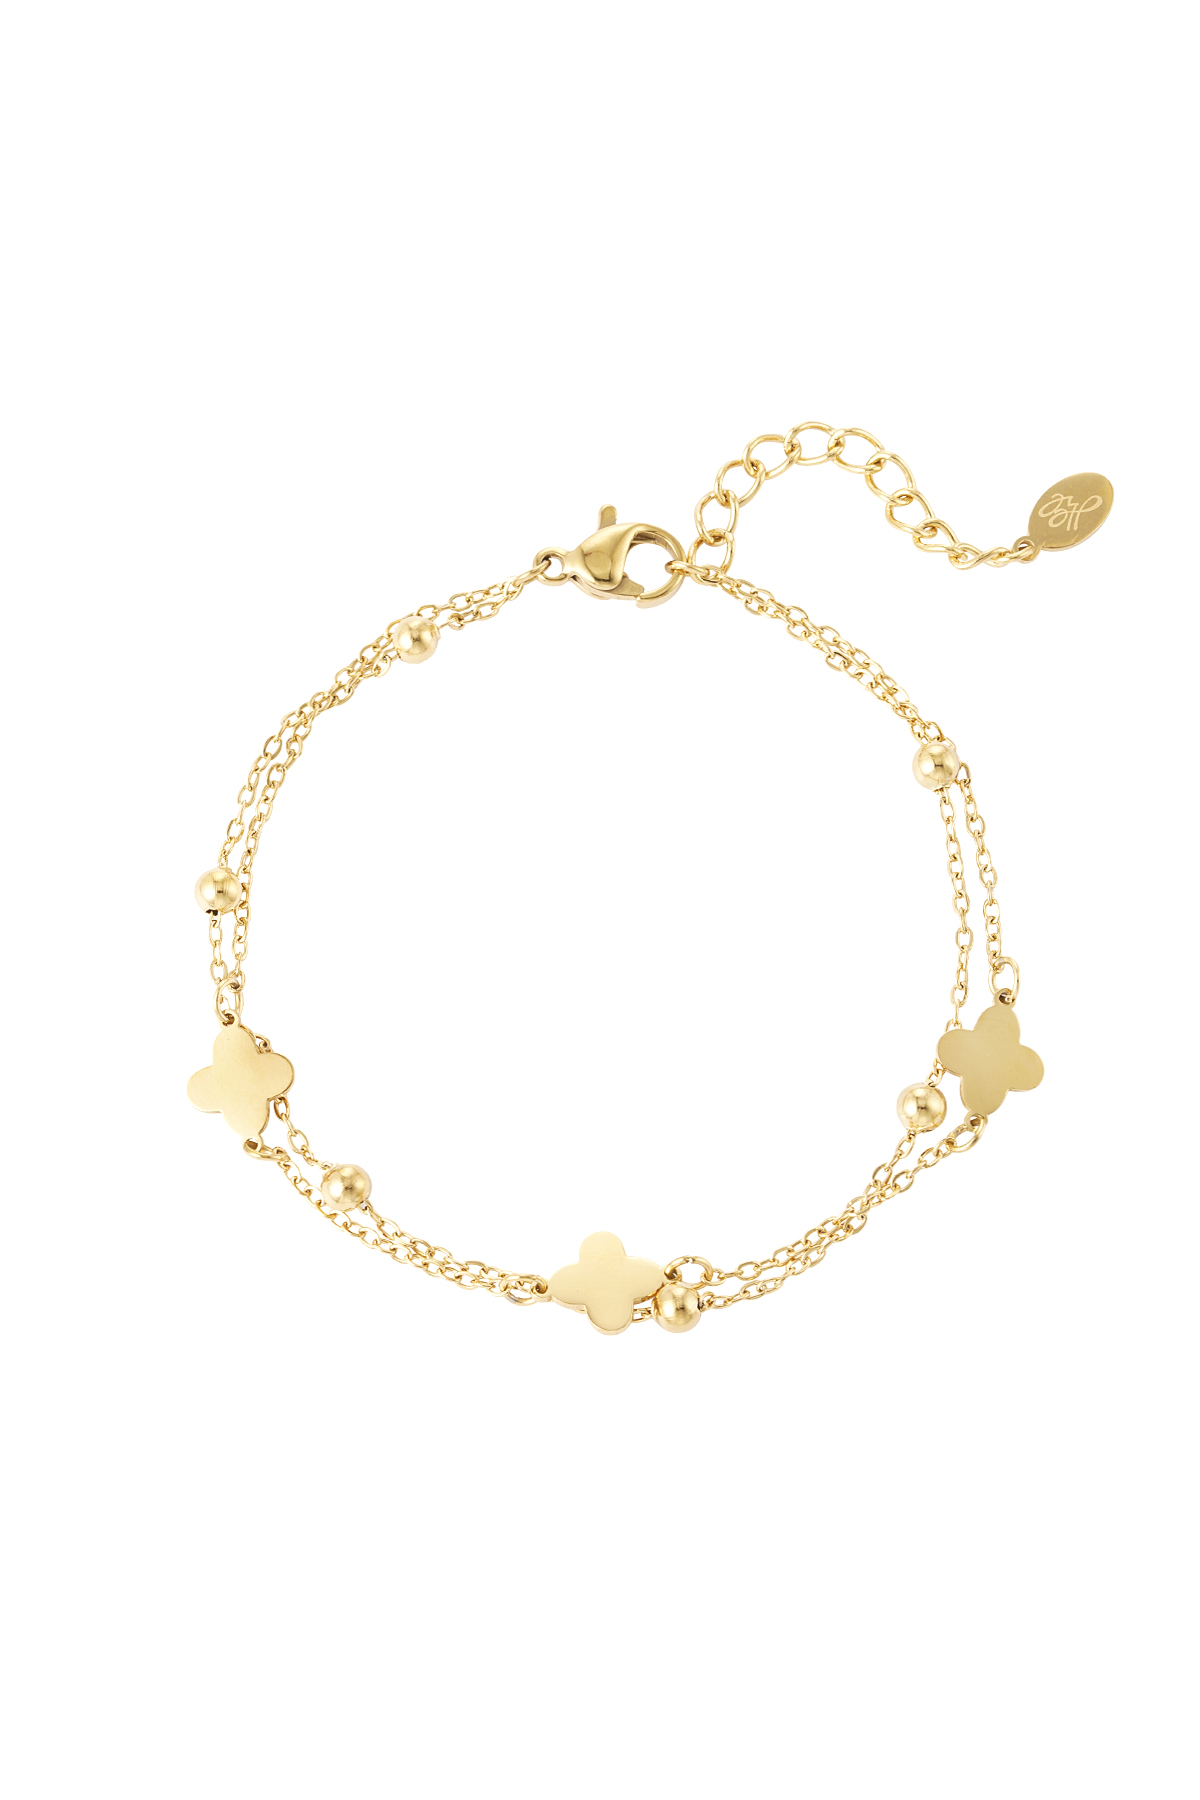 Double bracelet clover/balls - gold 